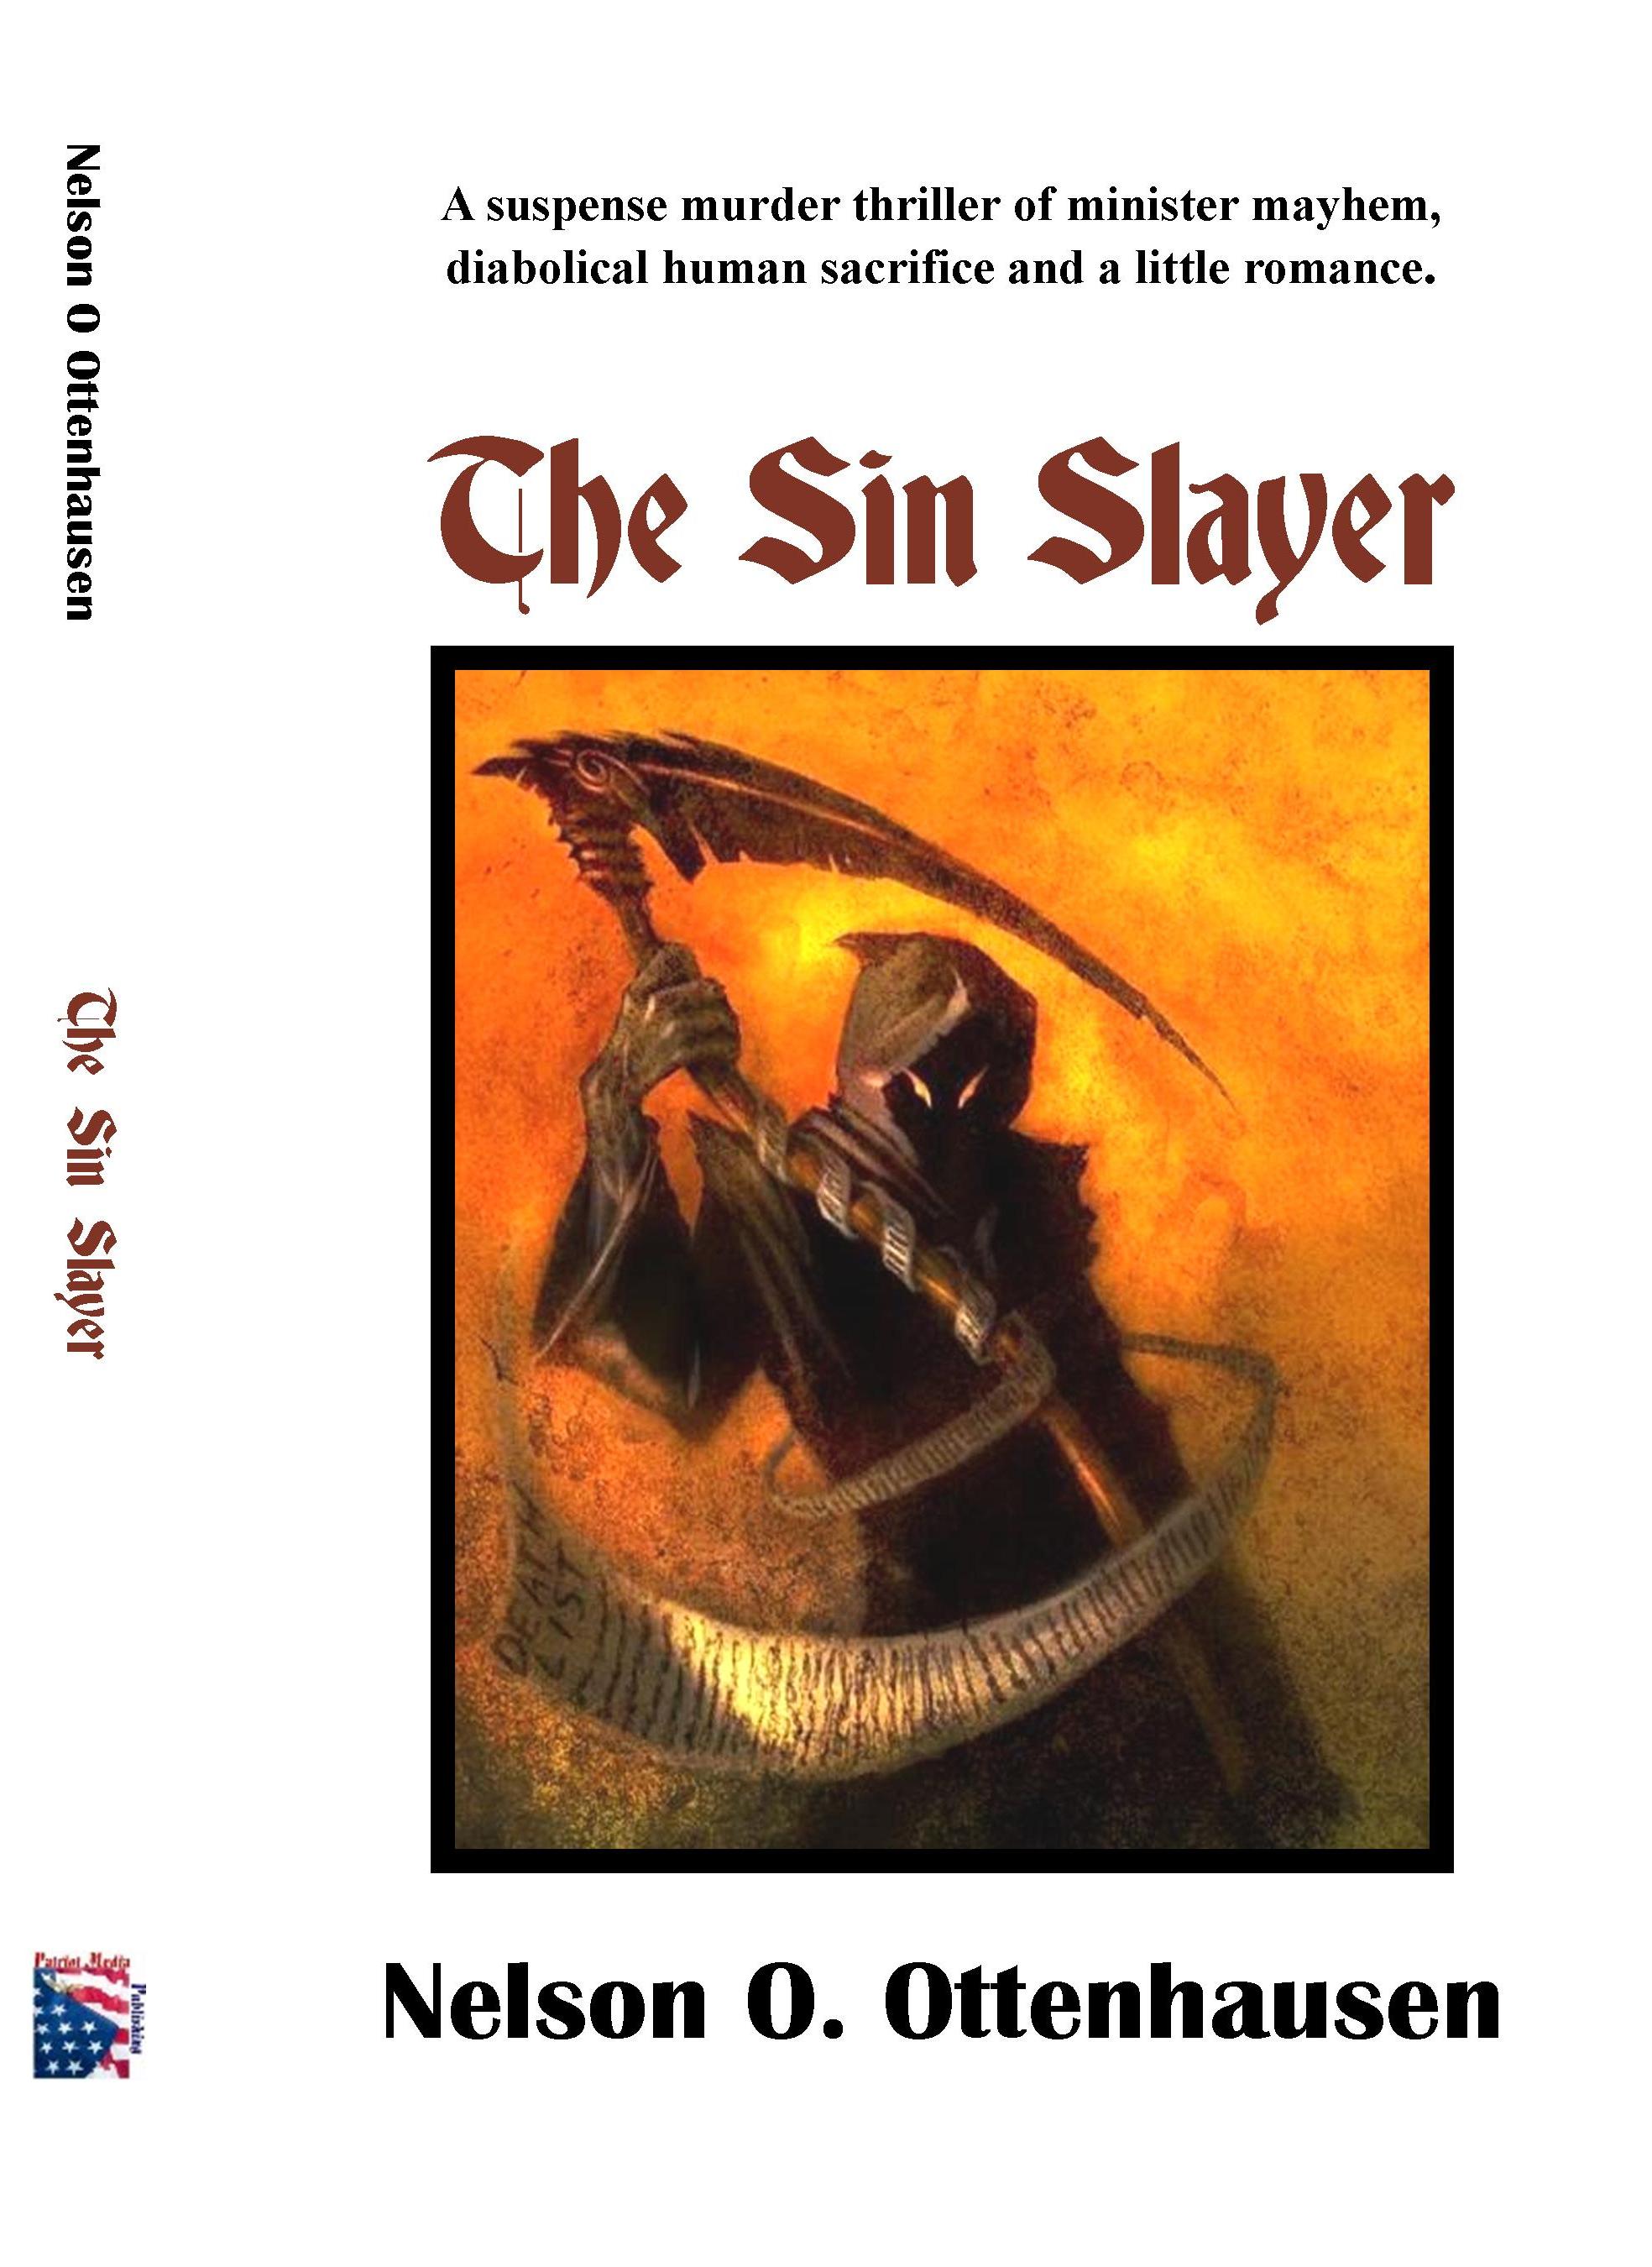 Sin Slayer by Nelson O. Ottenhausen www.booksbyneslon.com